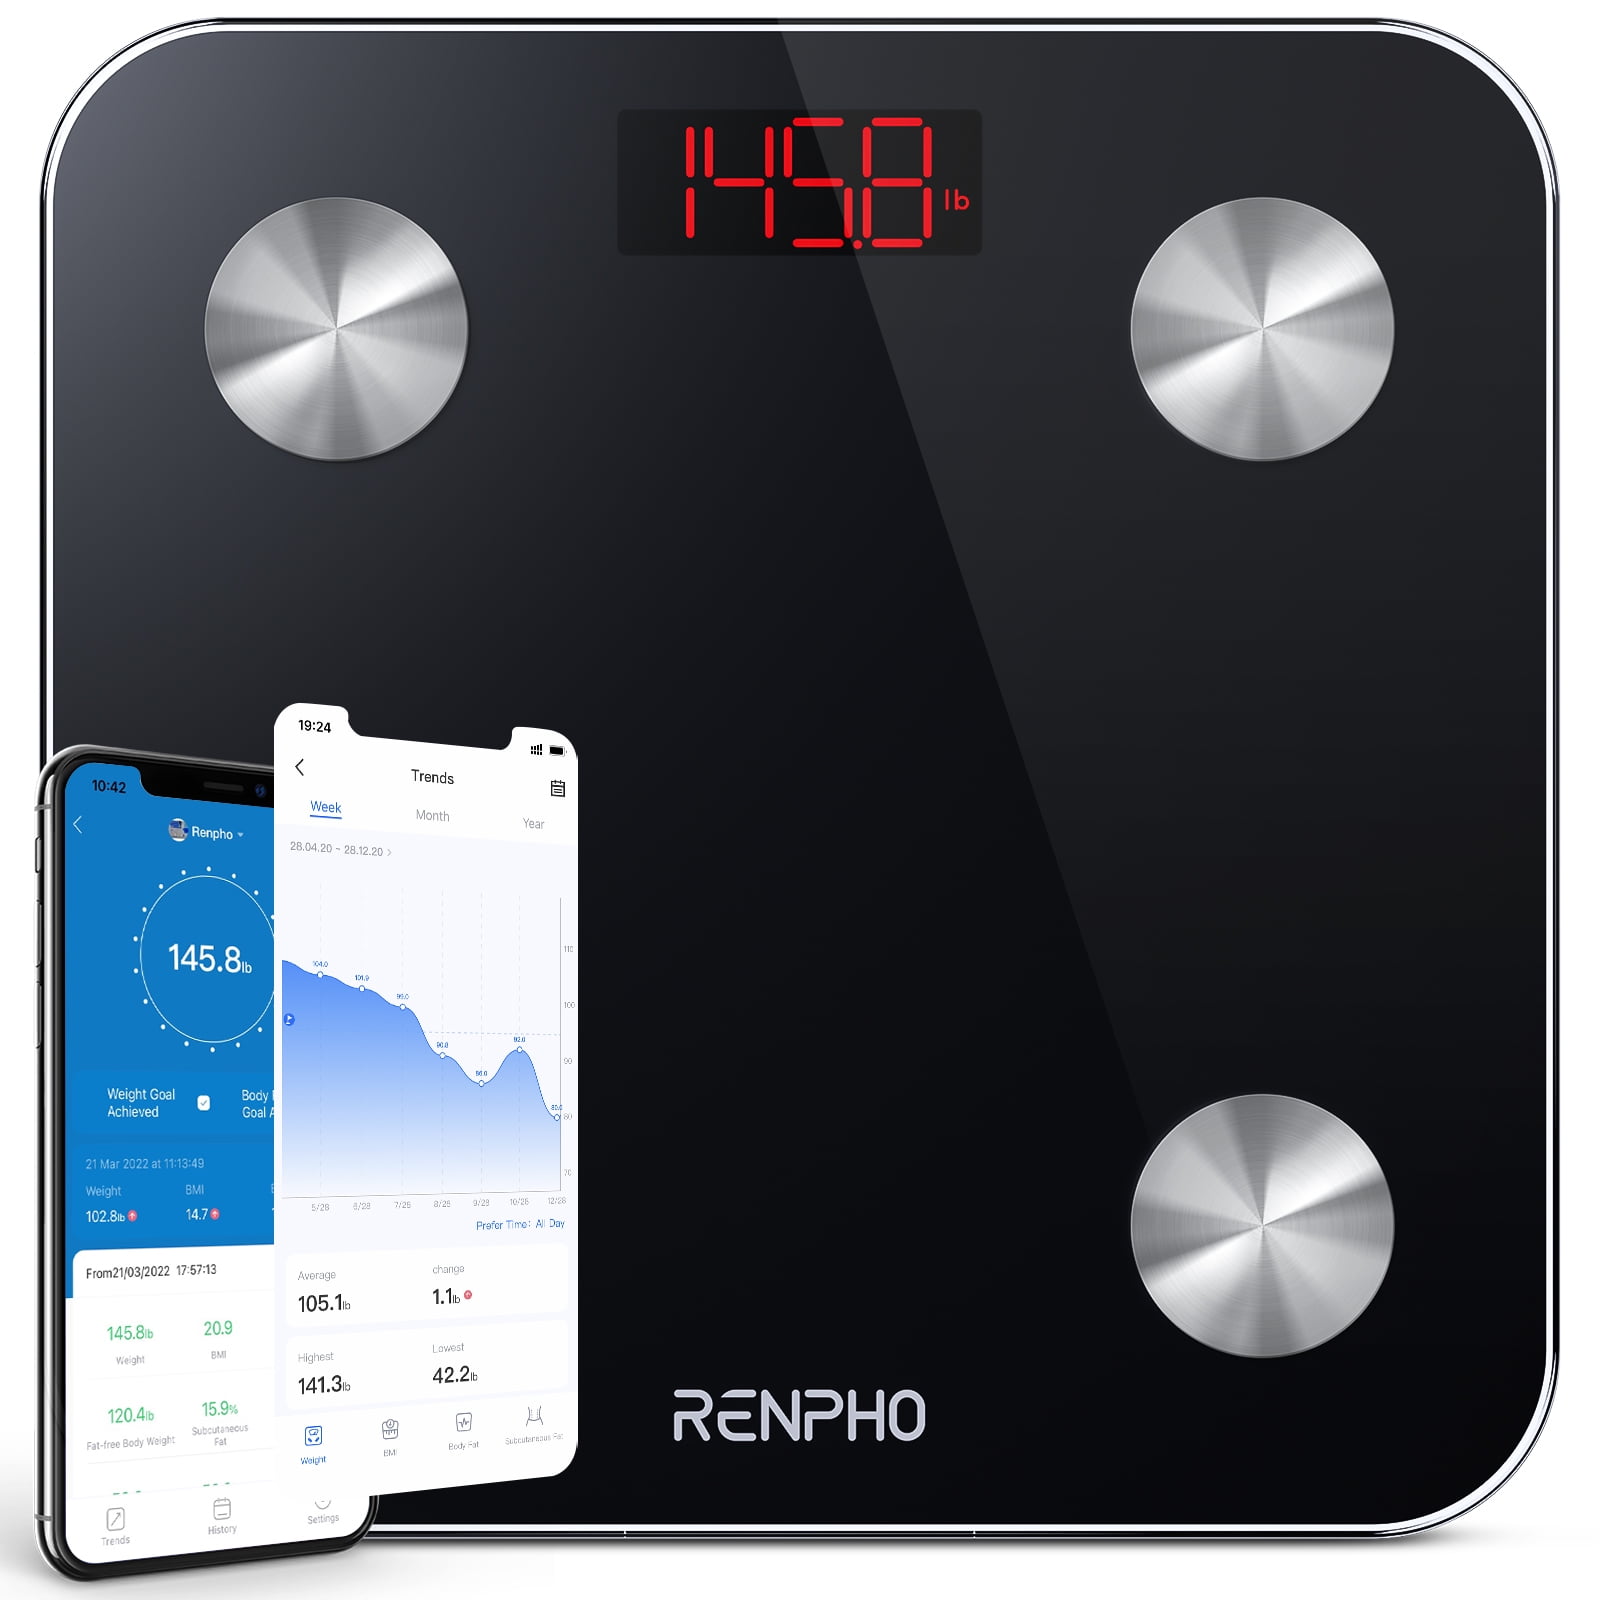 RENPHO High Accuracy Bluetooth Smart Body Weight Scale, FSA